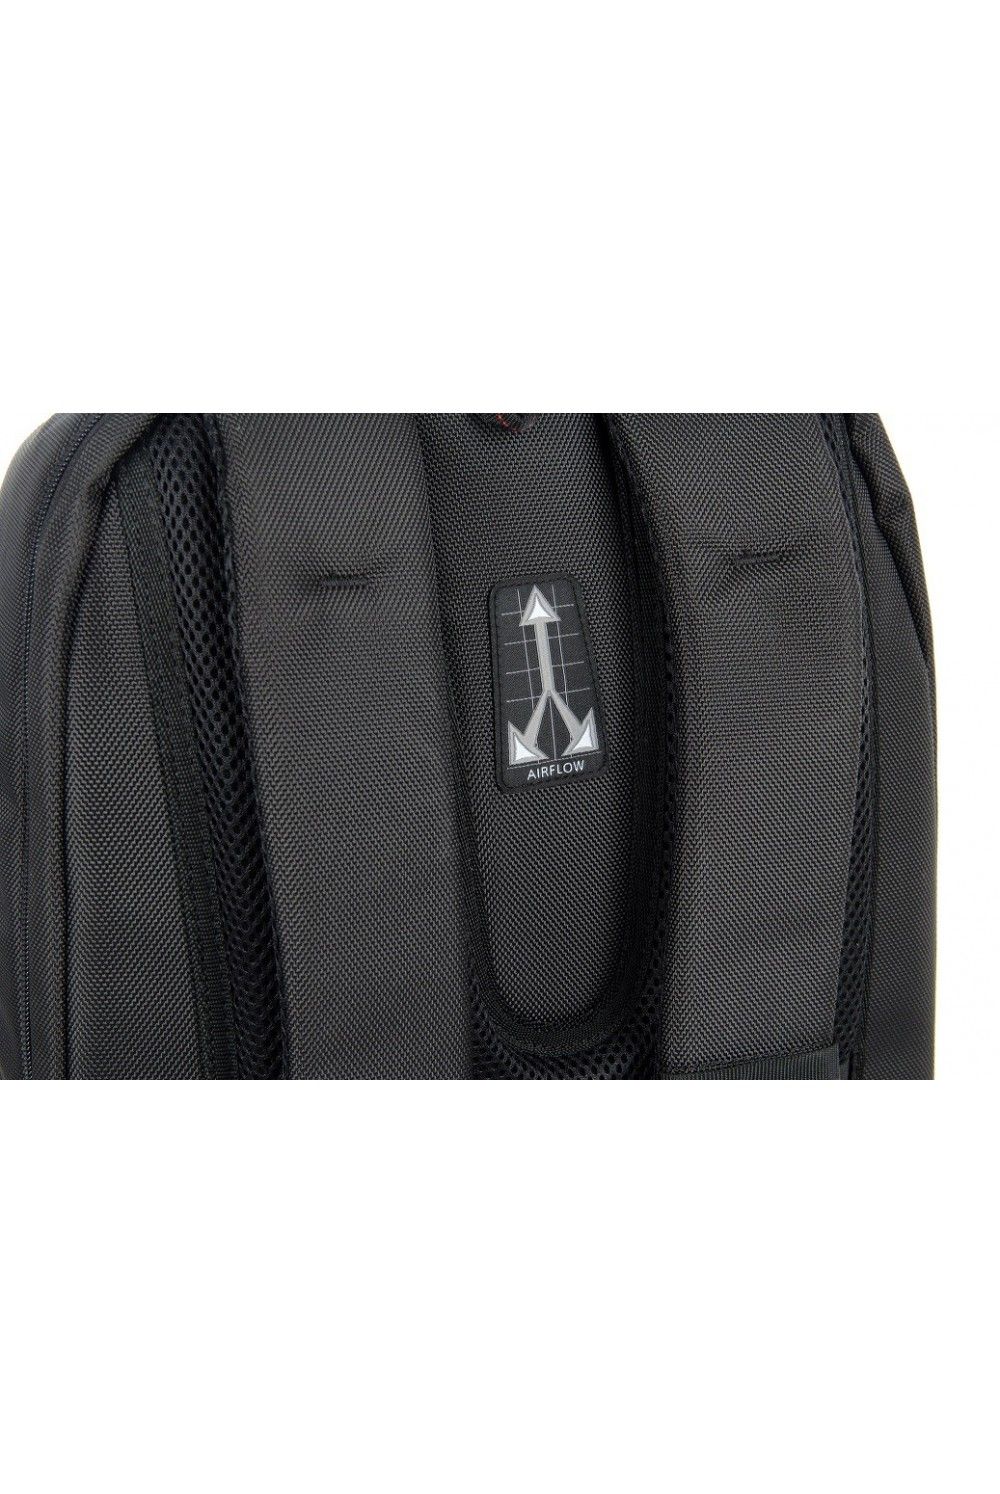 Roncato laptop backpack BIZ 2 15.6 inches